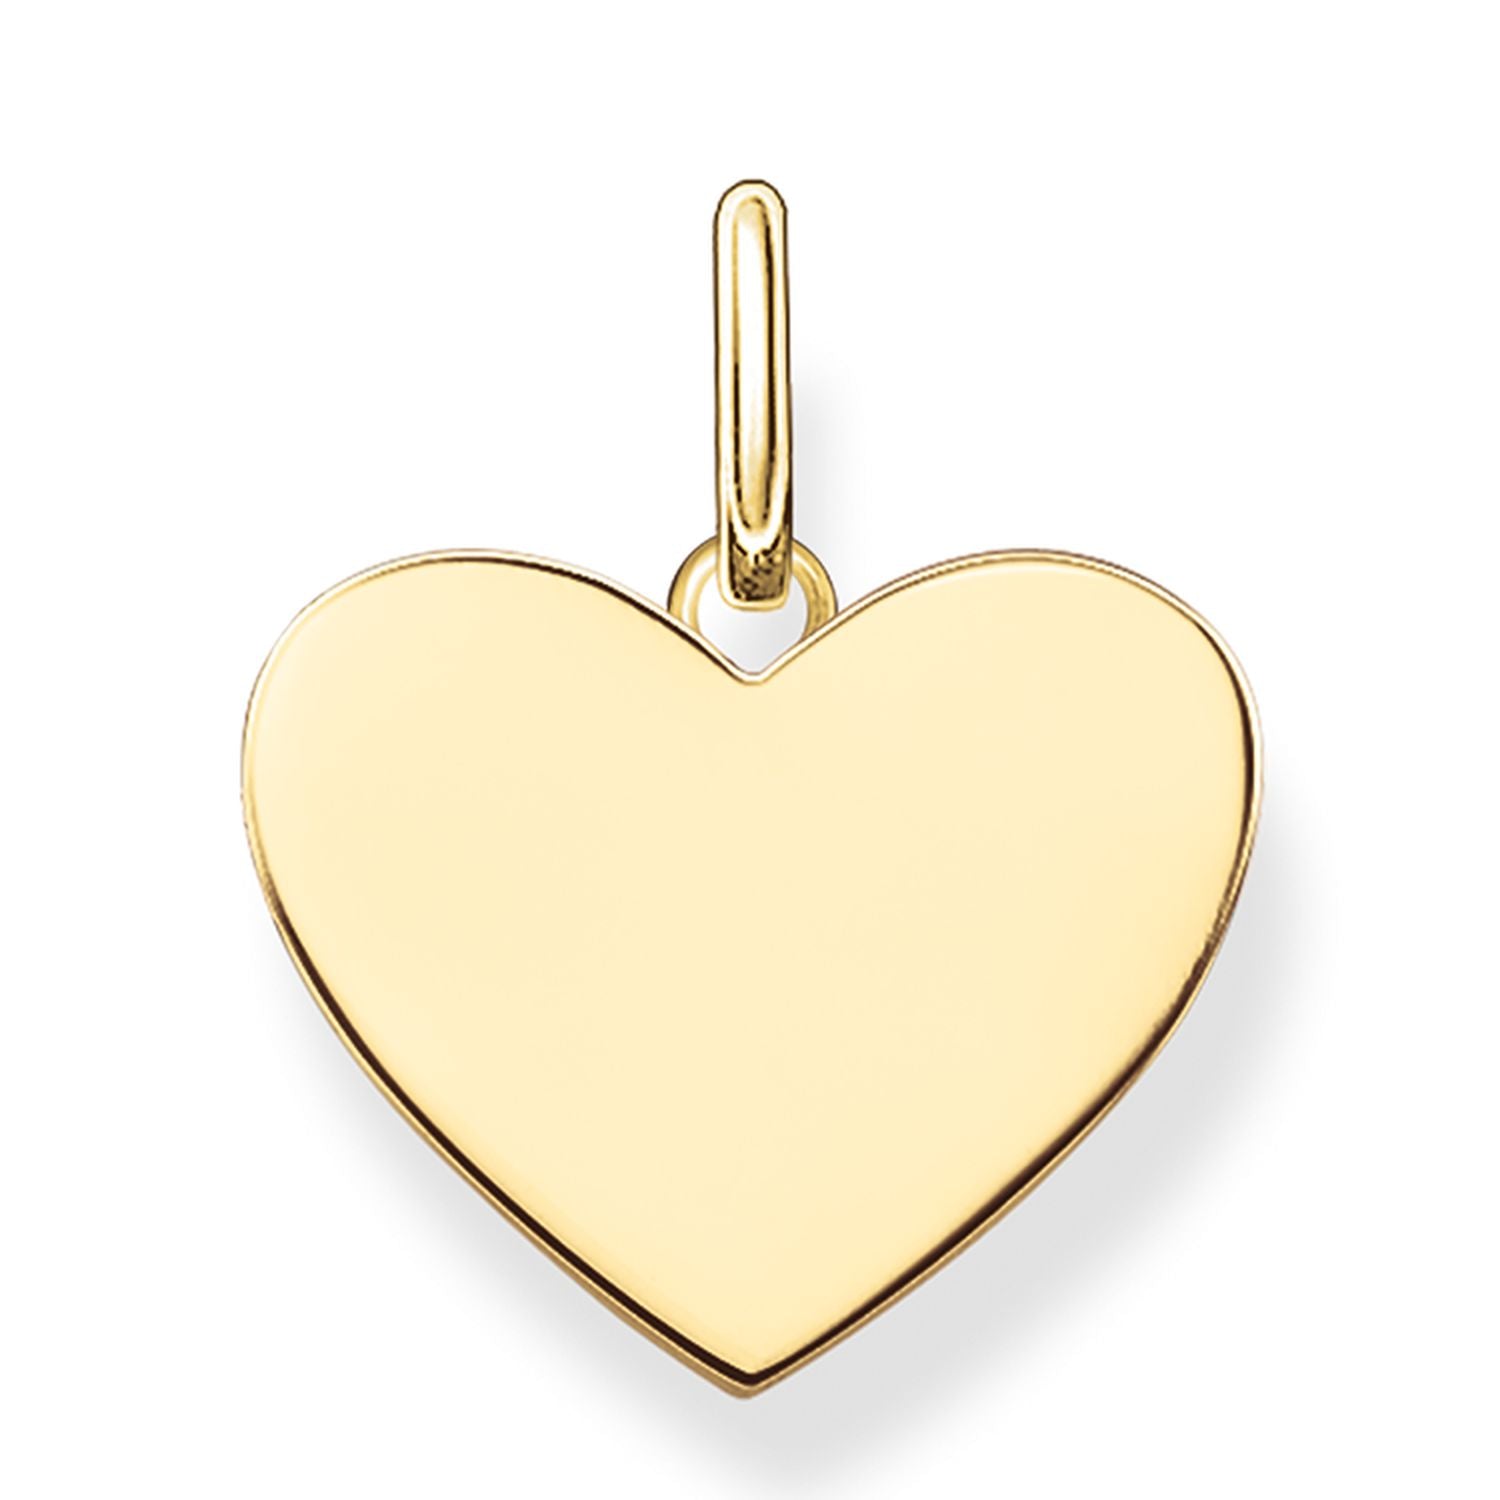 Сердечко из золота. Подвеска сердце золото. Золотая подвеска "сердце". Подверстку сердце золото. Золотой кулон сердечко.